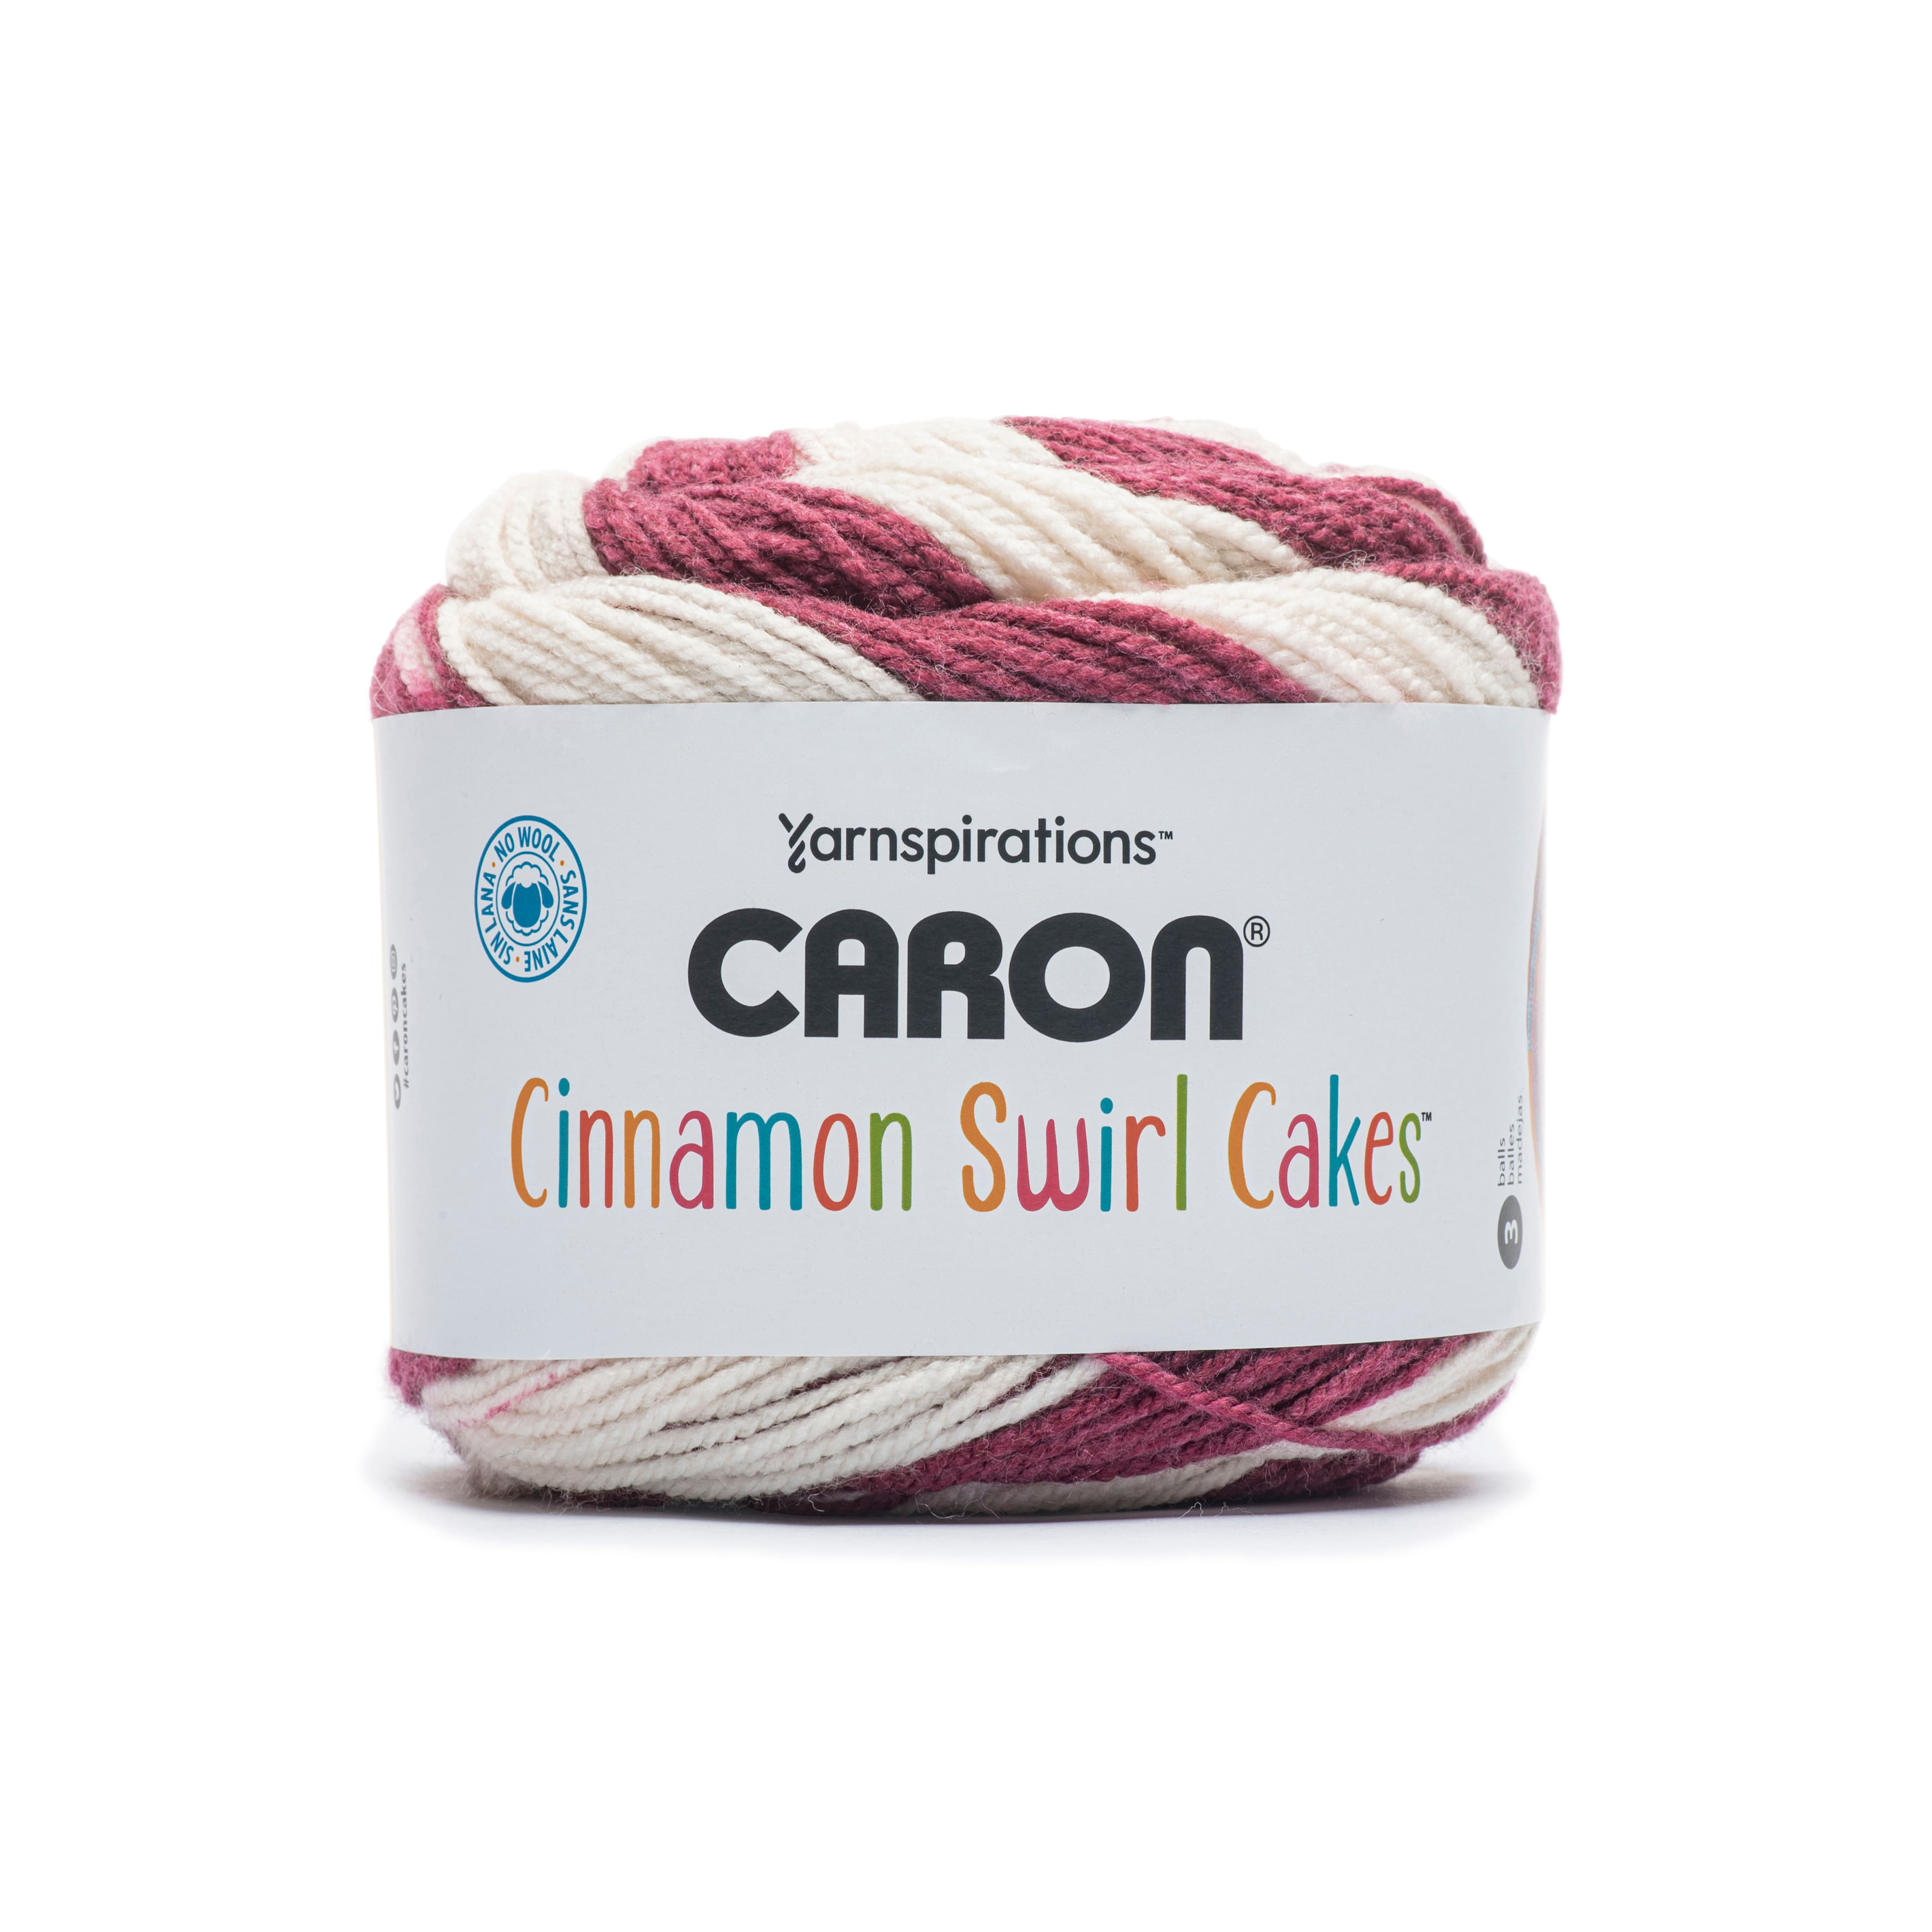 Caron Cinnamon Swirl Cakes Yarn Lilac & Lime Skein for sale online